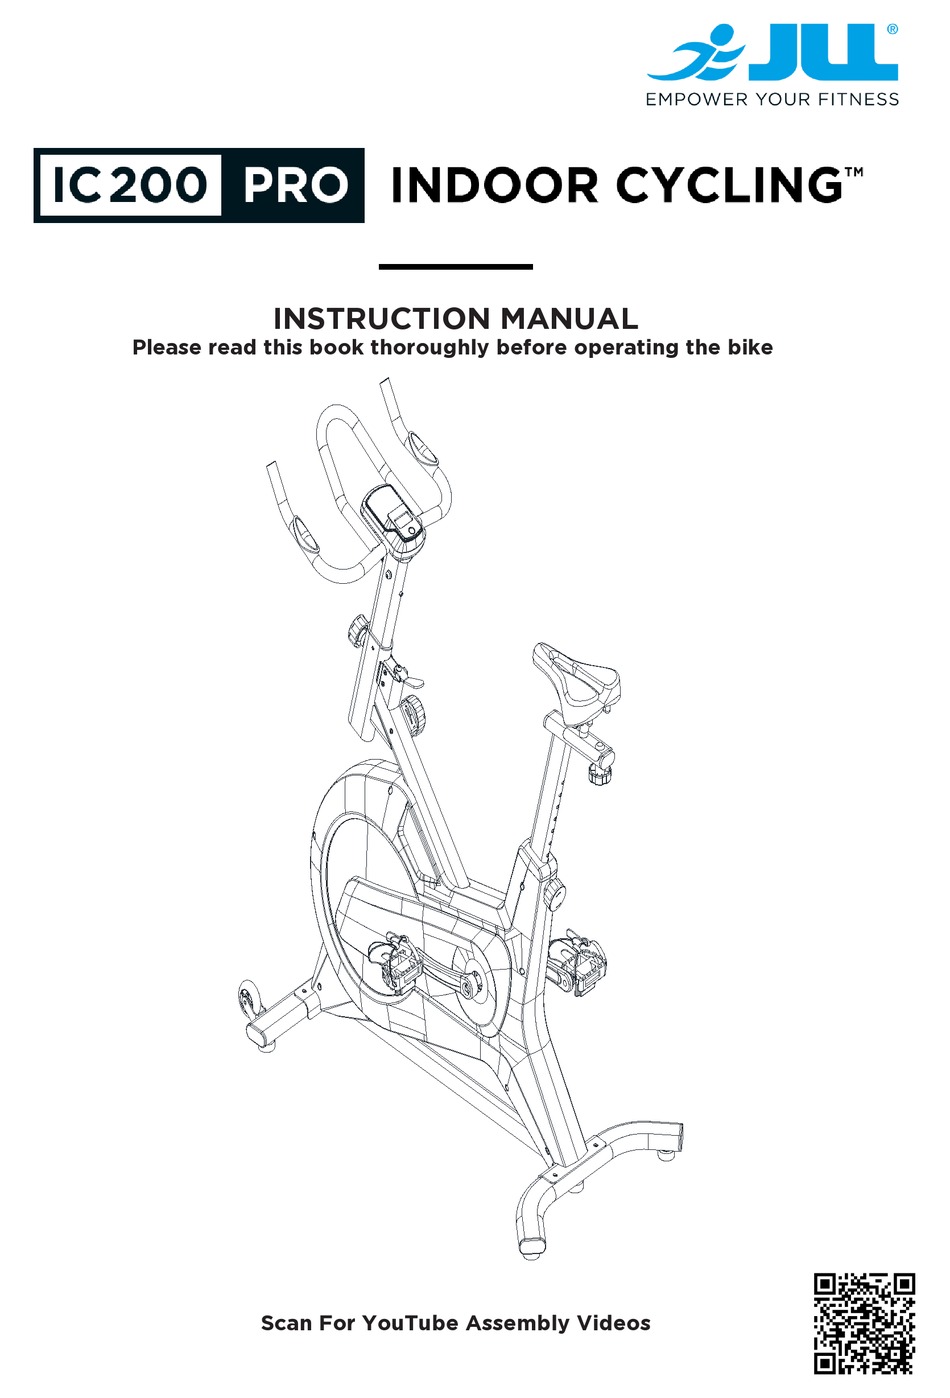 kirsty exercise bike instruction manual